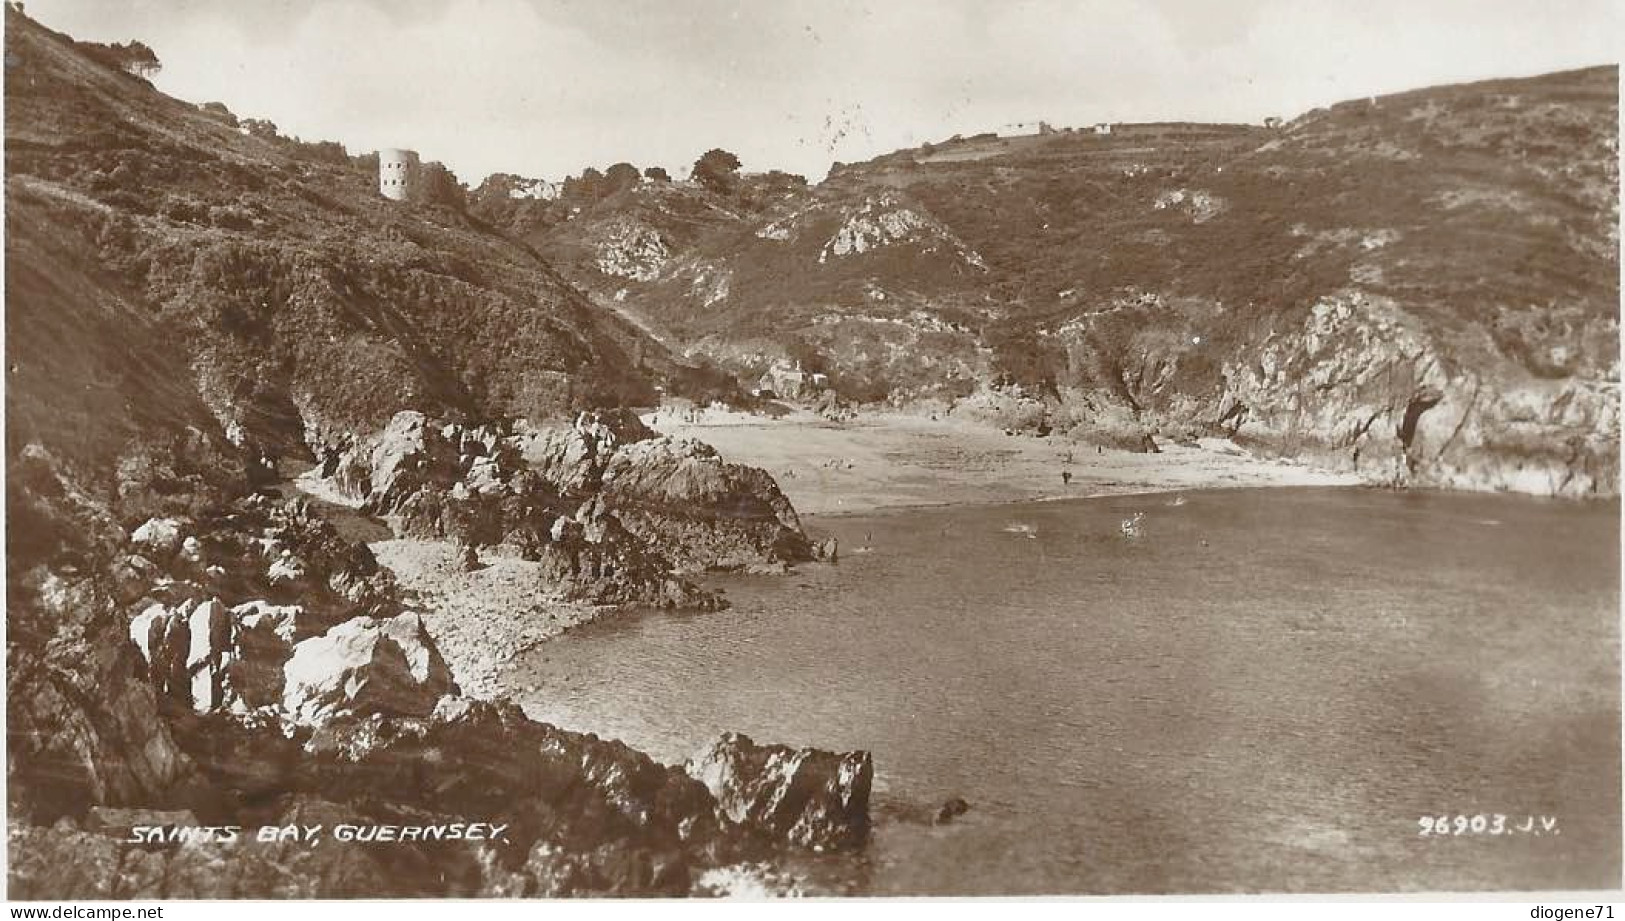 Guernsey Saints Bay Valentine's Post Card - Guernsey